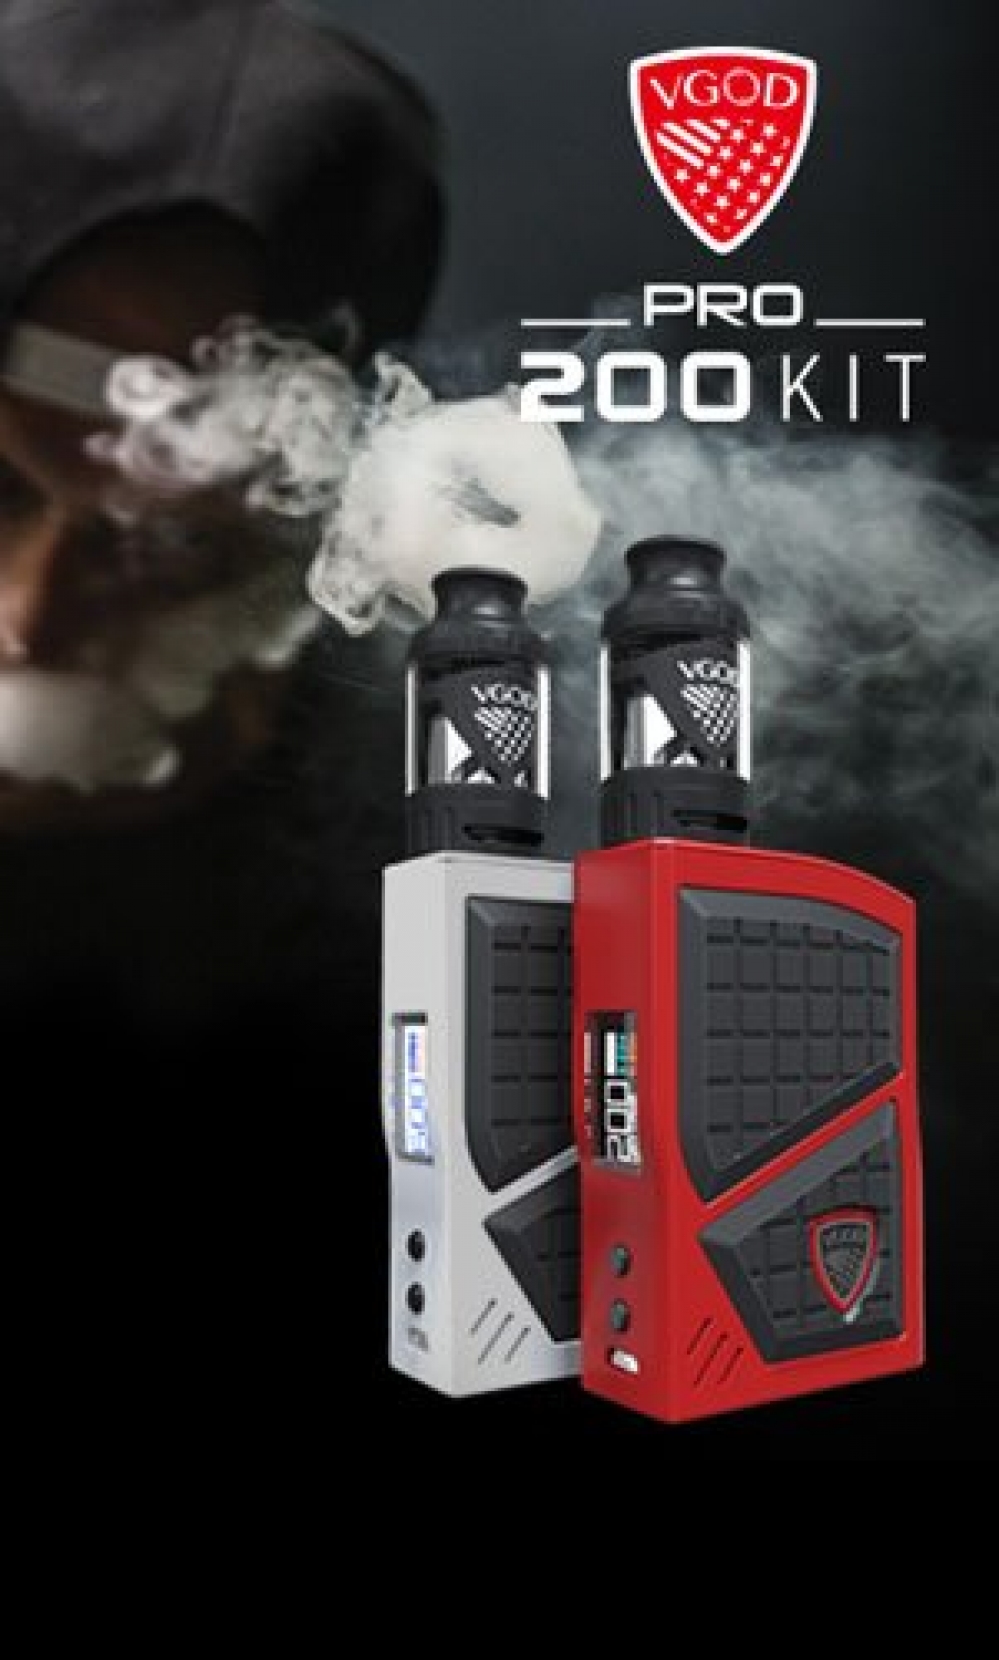 Kit VGOD Pro 200